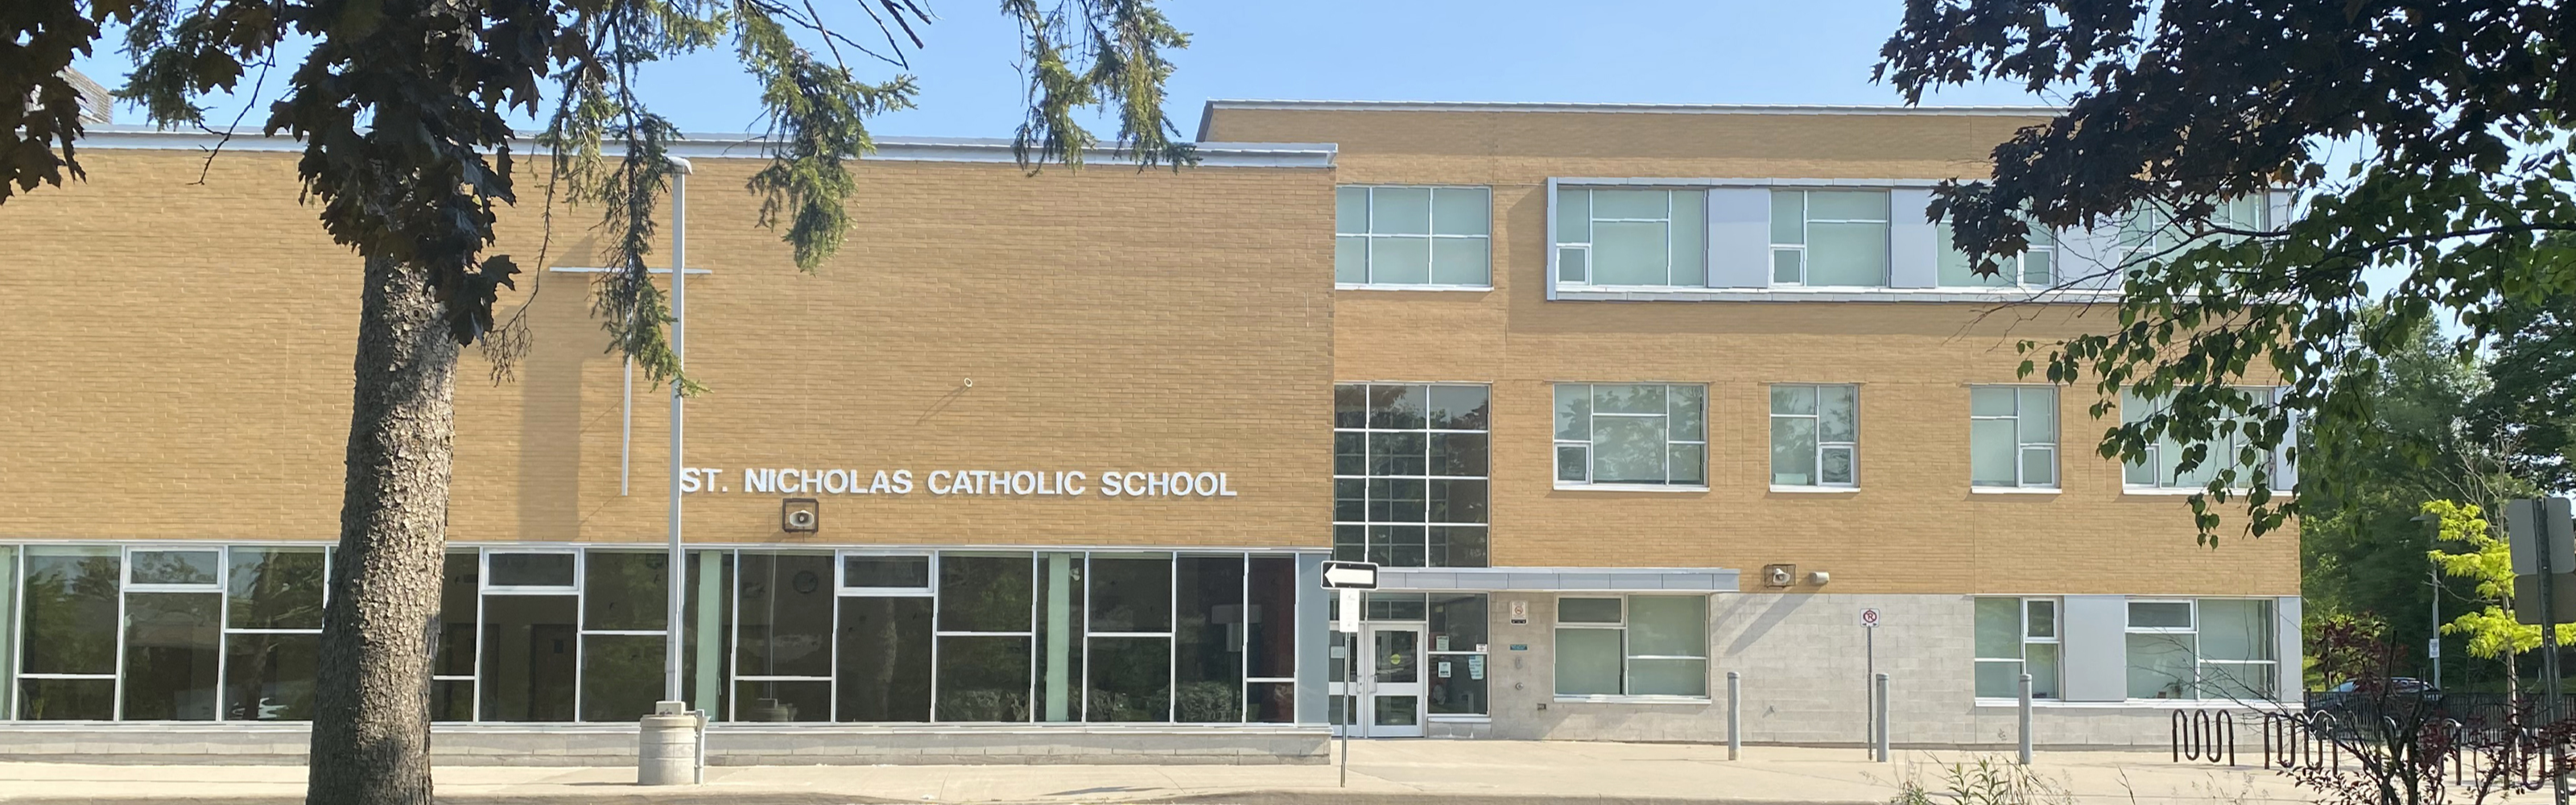 Front of the St. Nicholas Catholic School building